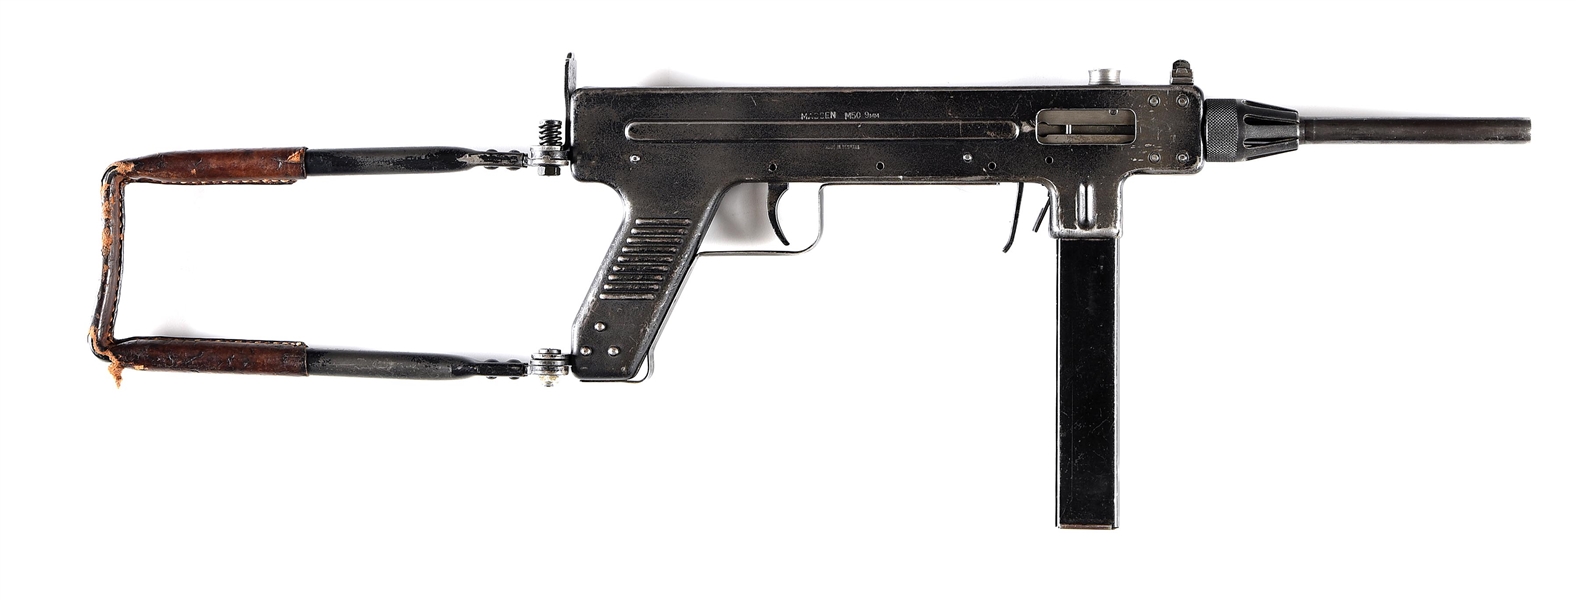 (N) DANISH MADSEN MODEL 50 MACHINE GUN (CURIO & RELIC).